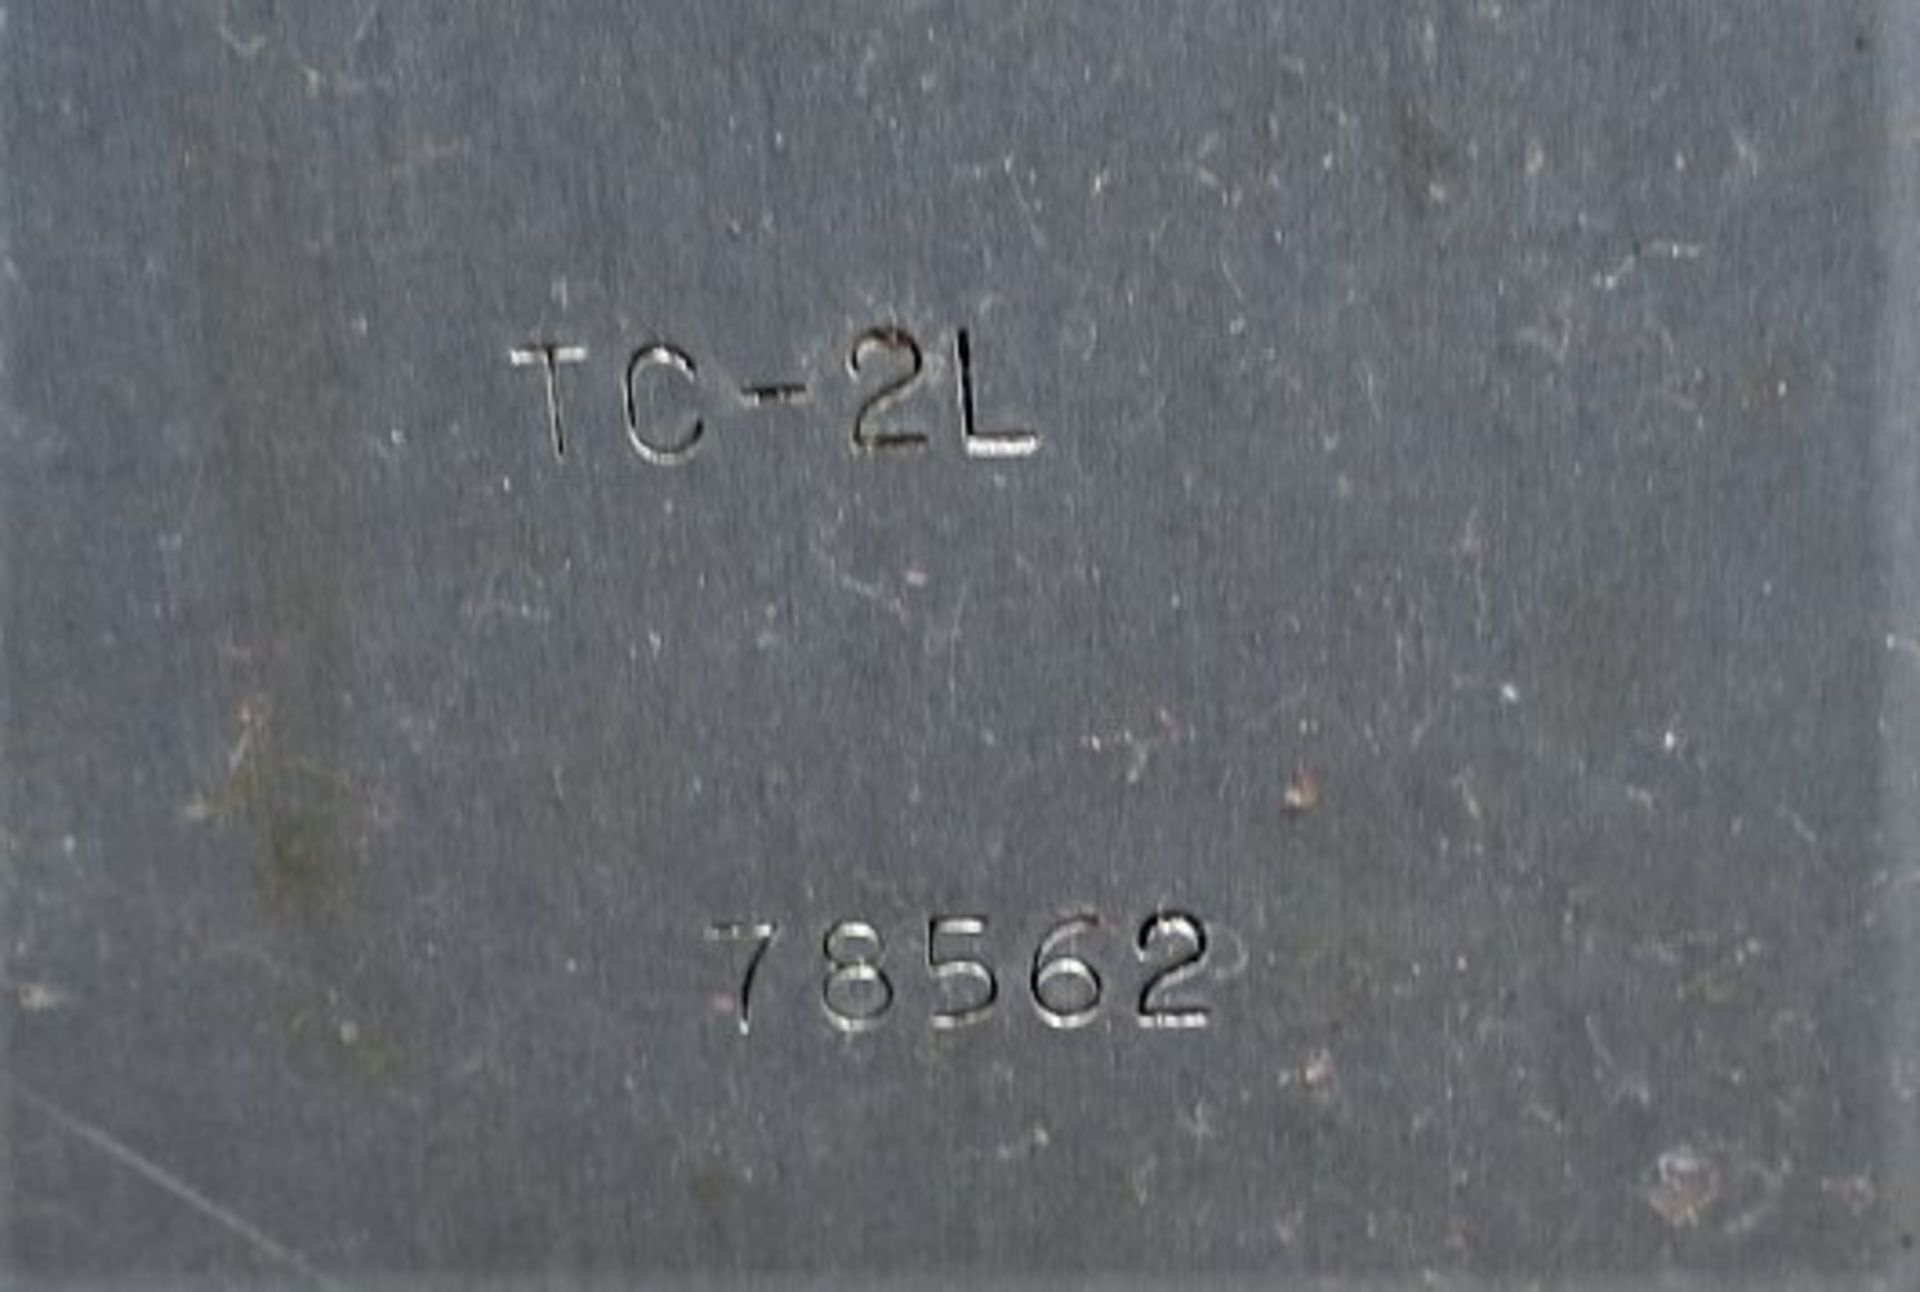 Amera Seiki TC-2L CNC Lathe, S/N 78562 - Image 9 of 9